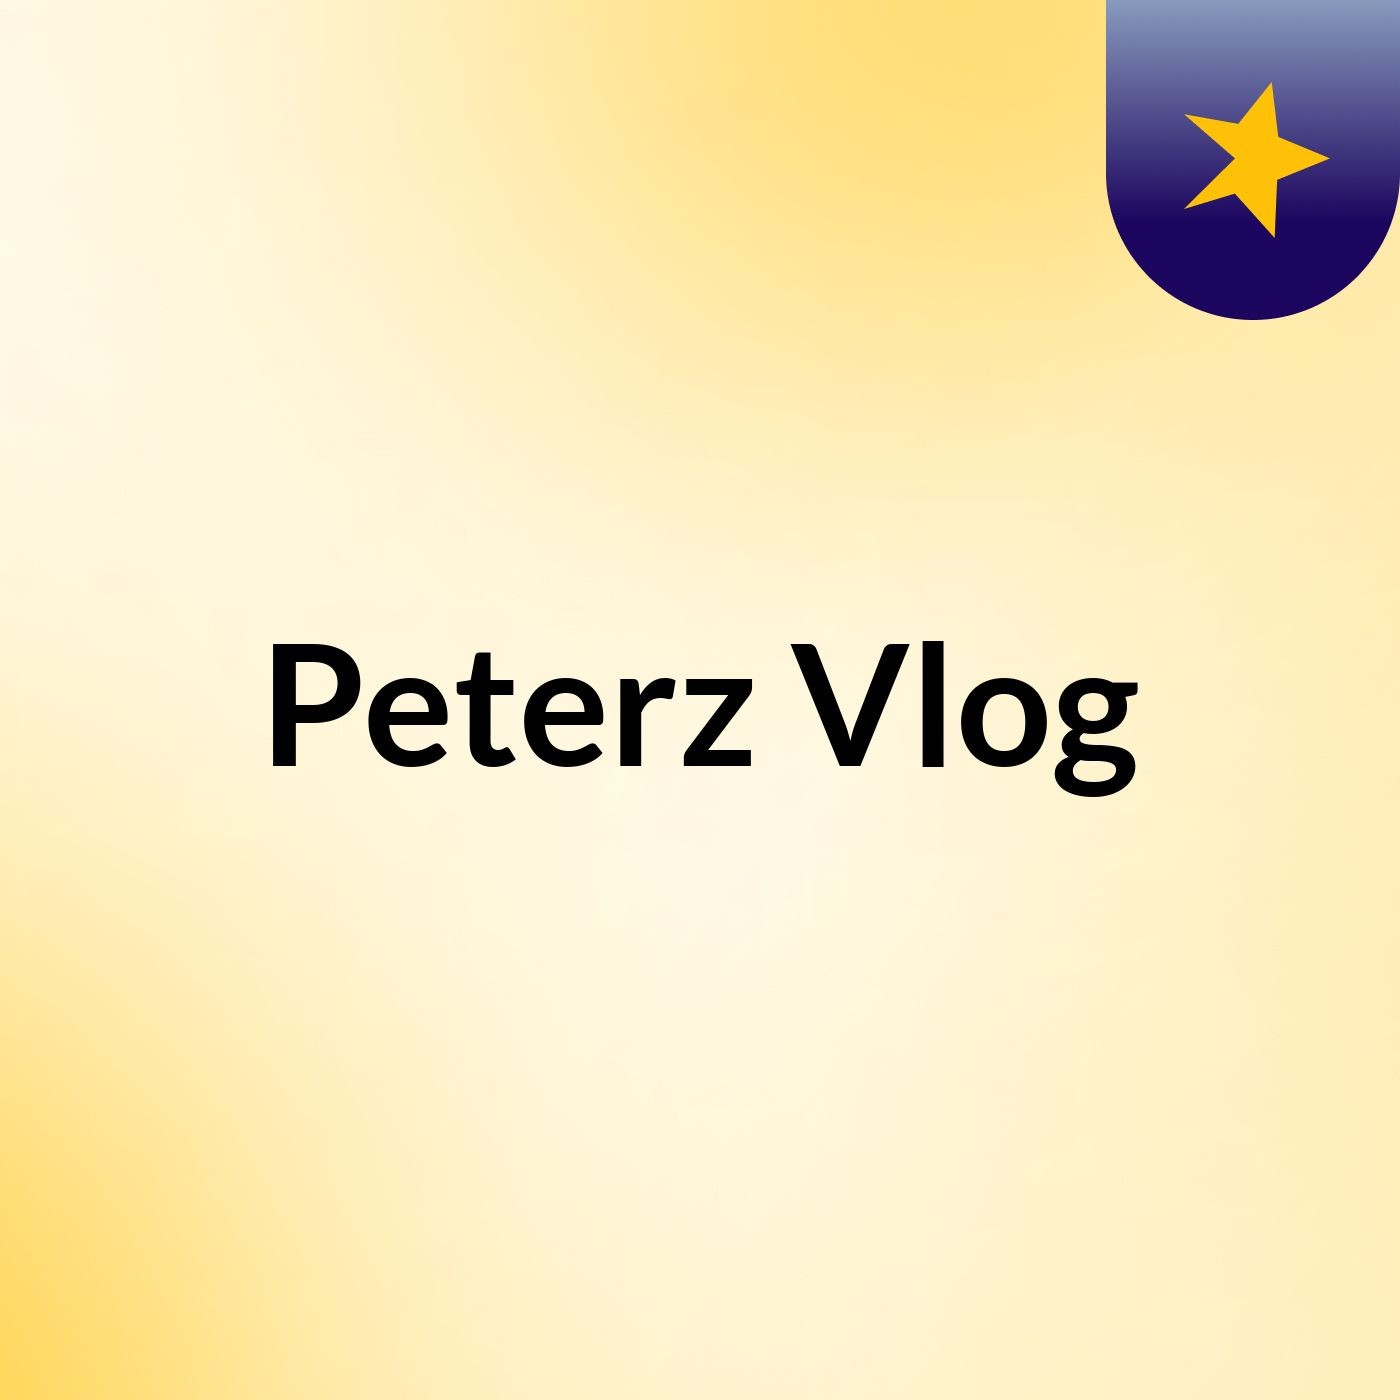 Episode 3 - Peterz Vlog